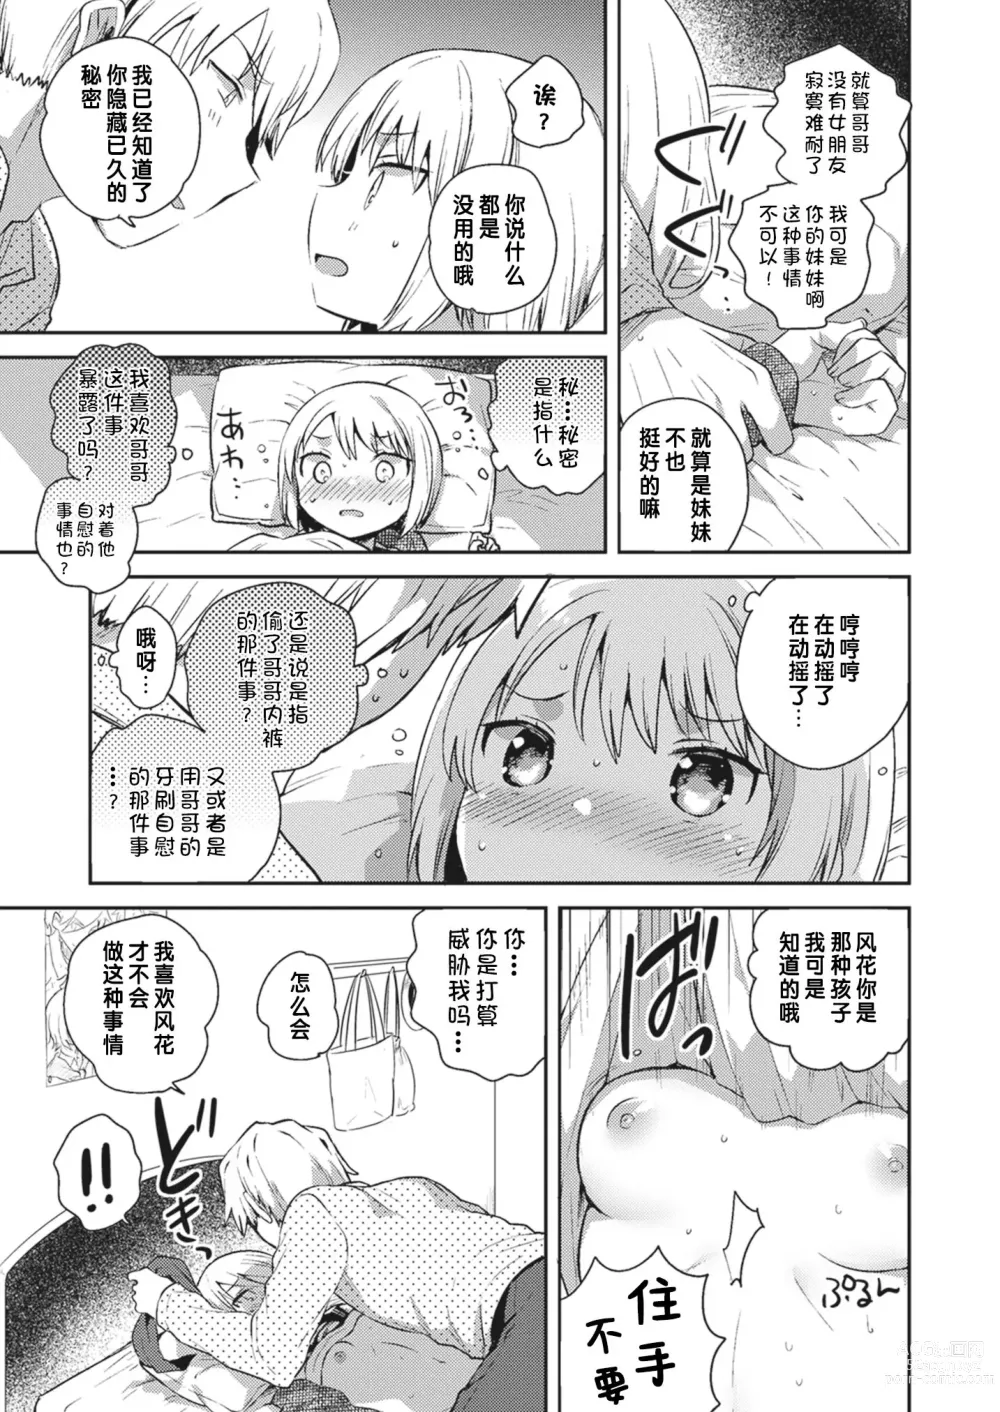 Page 5 of doujinshi 能听见妹妹的心声